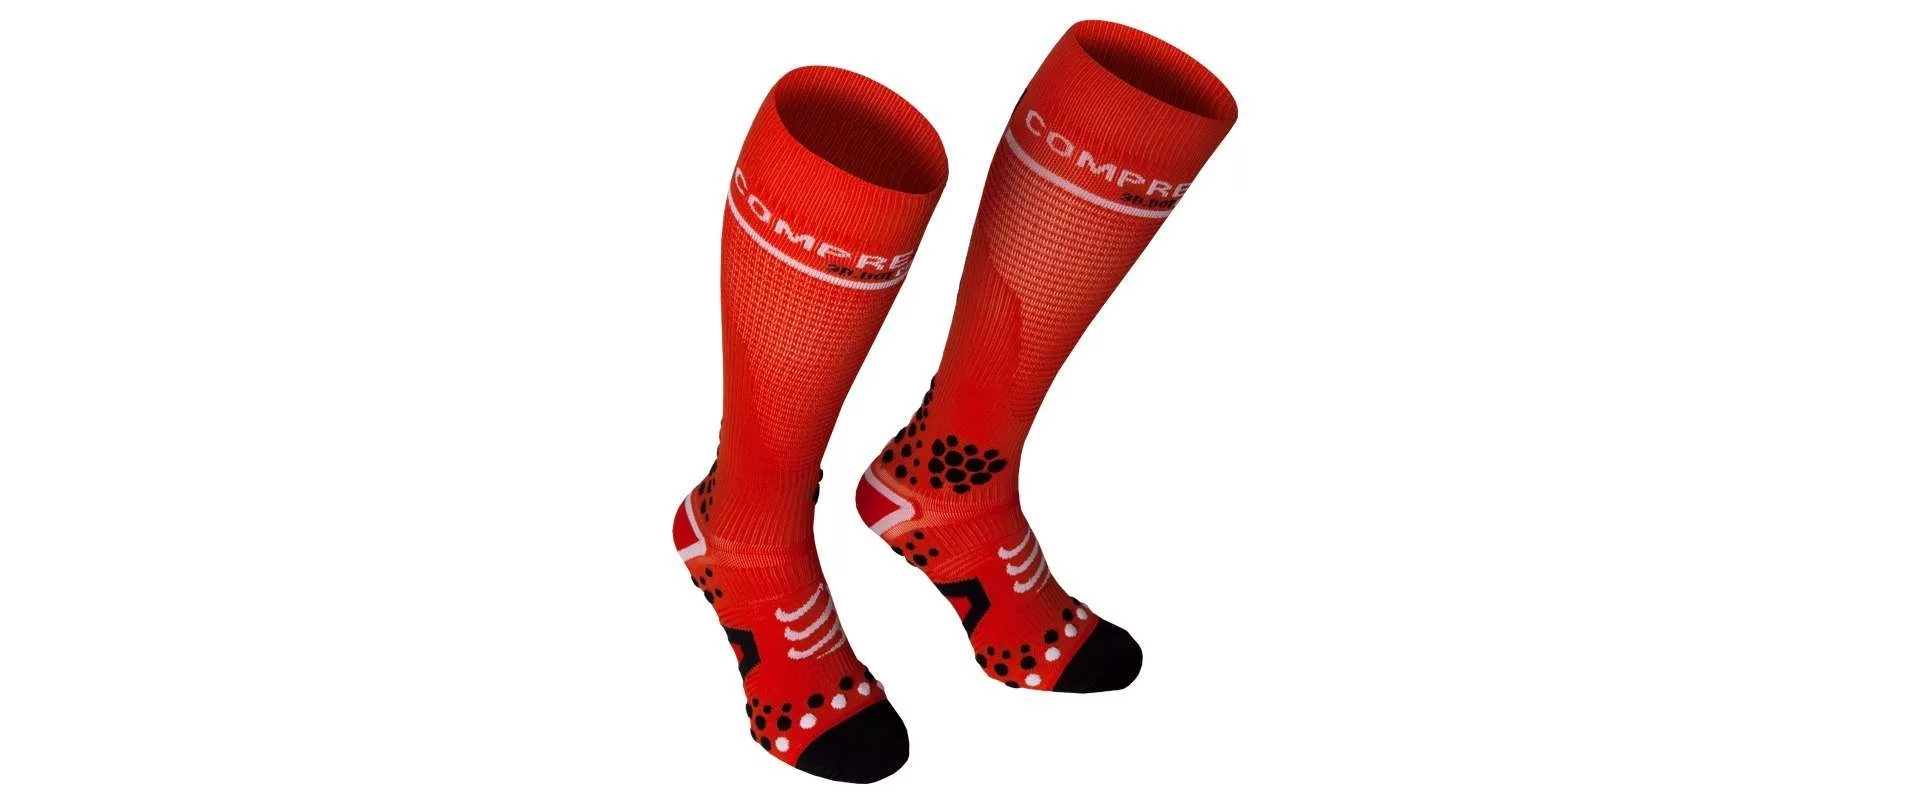 Compressport Full Socks V2 / Компрессионные гольфы